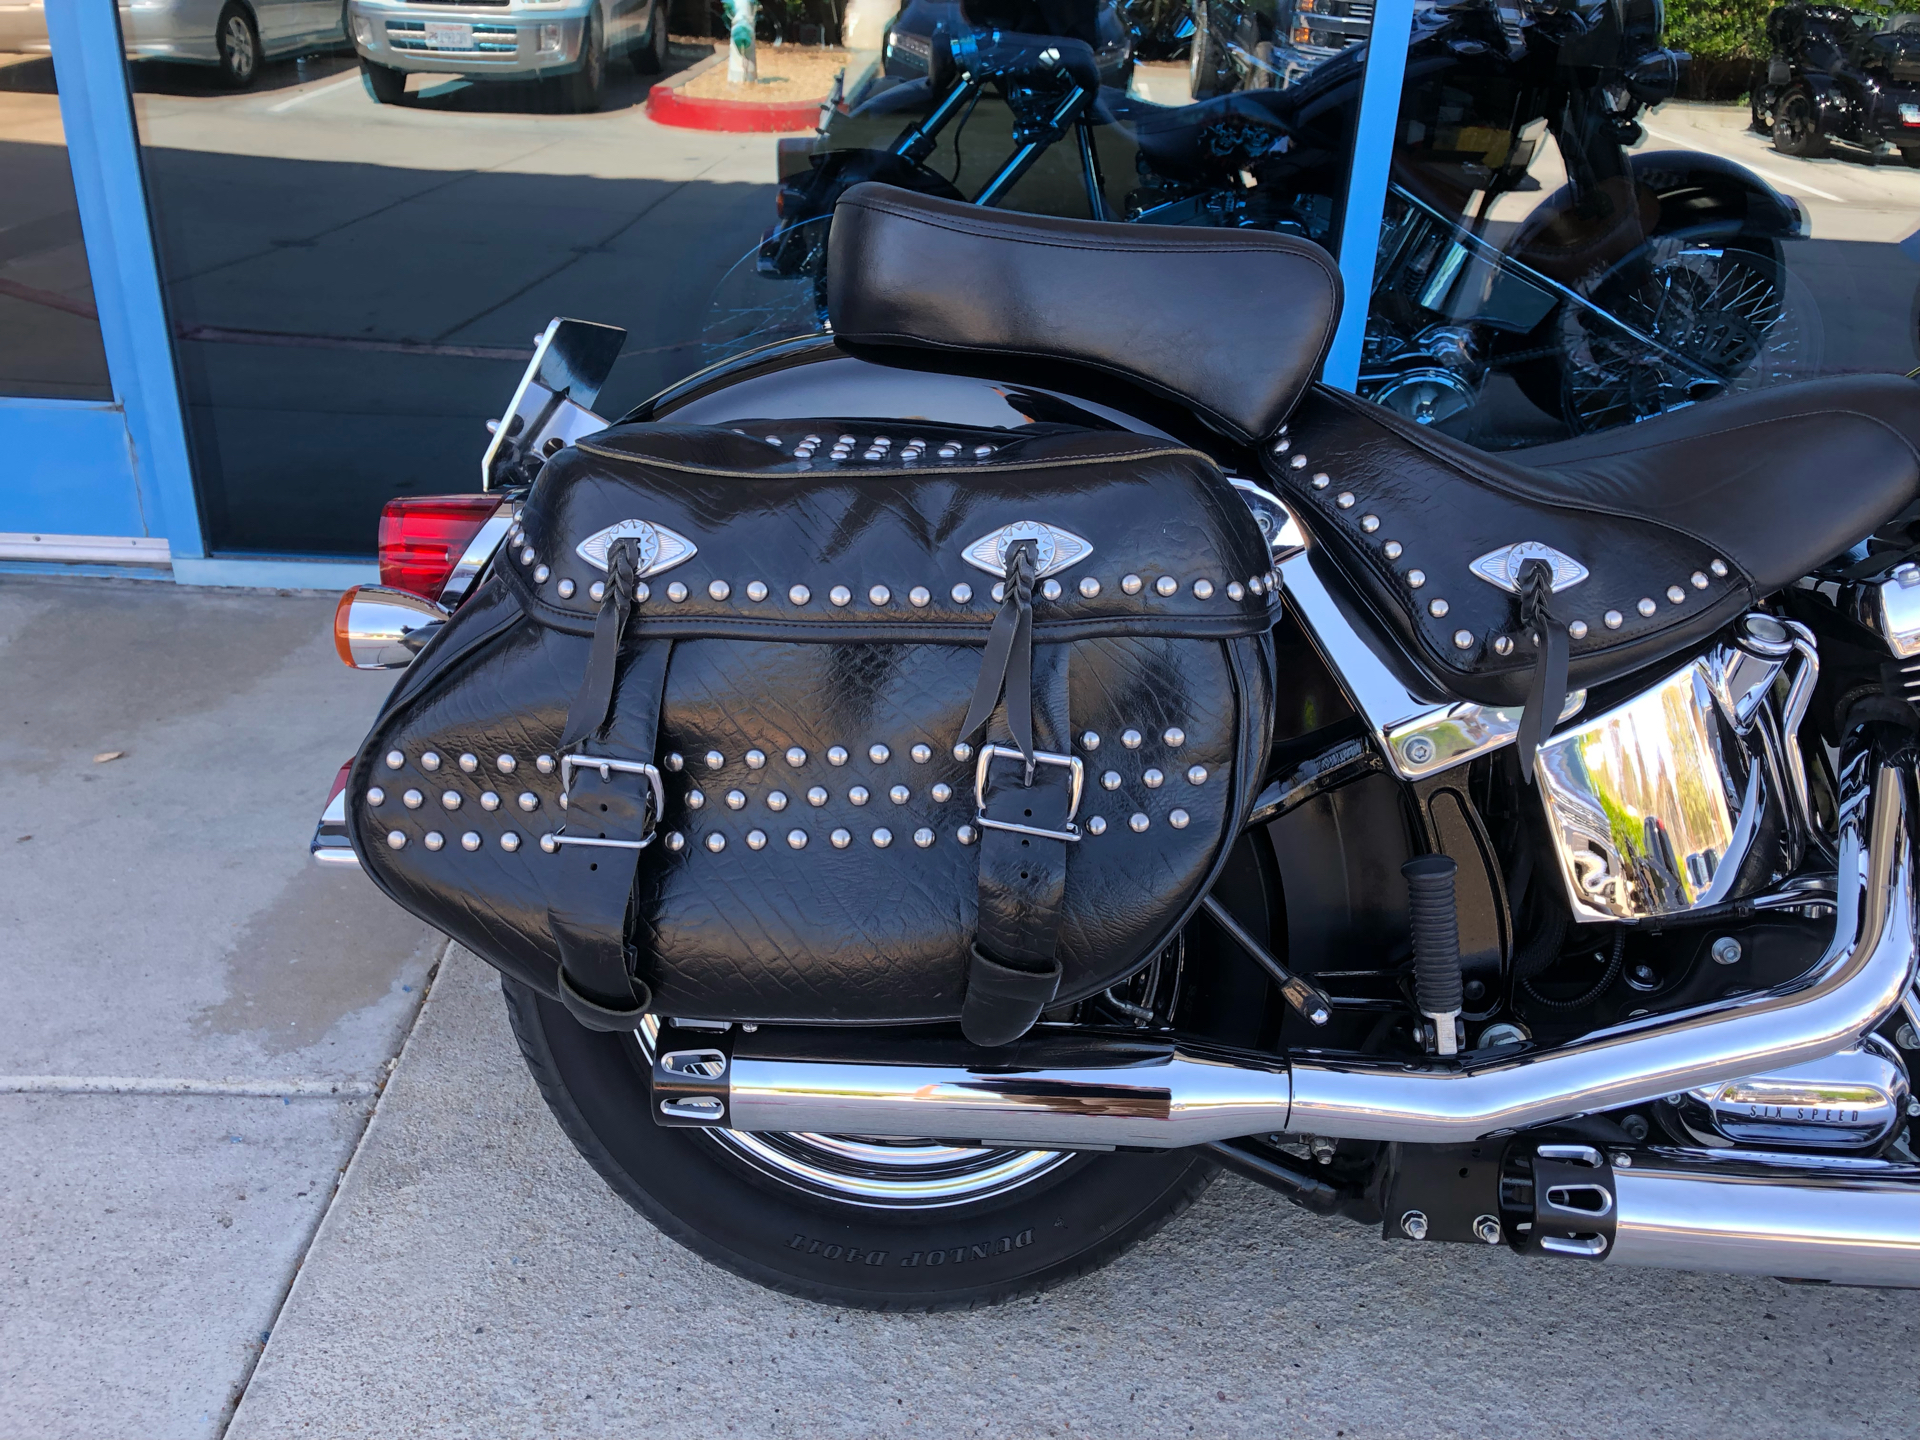 2013 Harley-Davidson Heritage Softail® Classic in Temecula, California - Photo 6